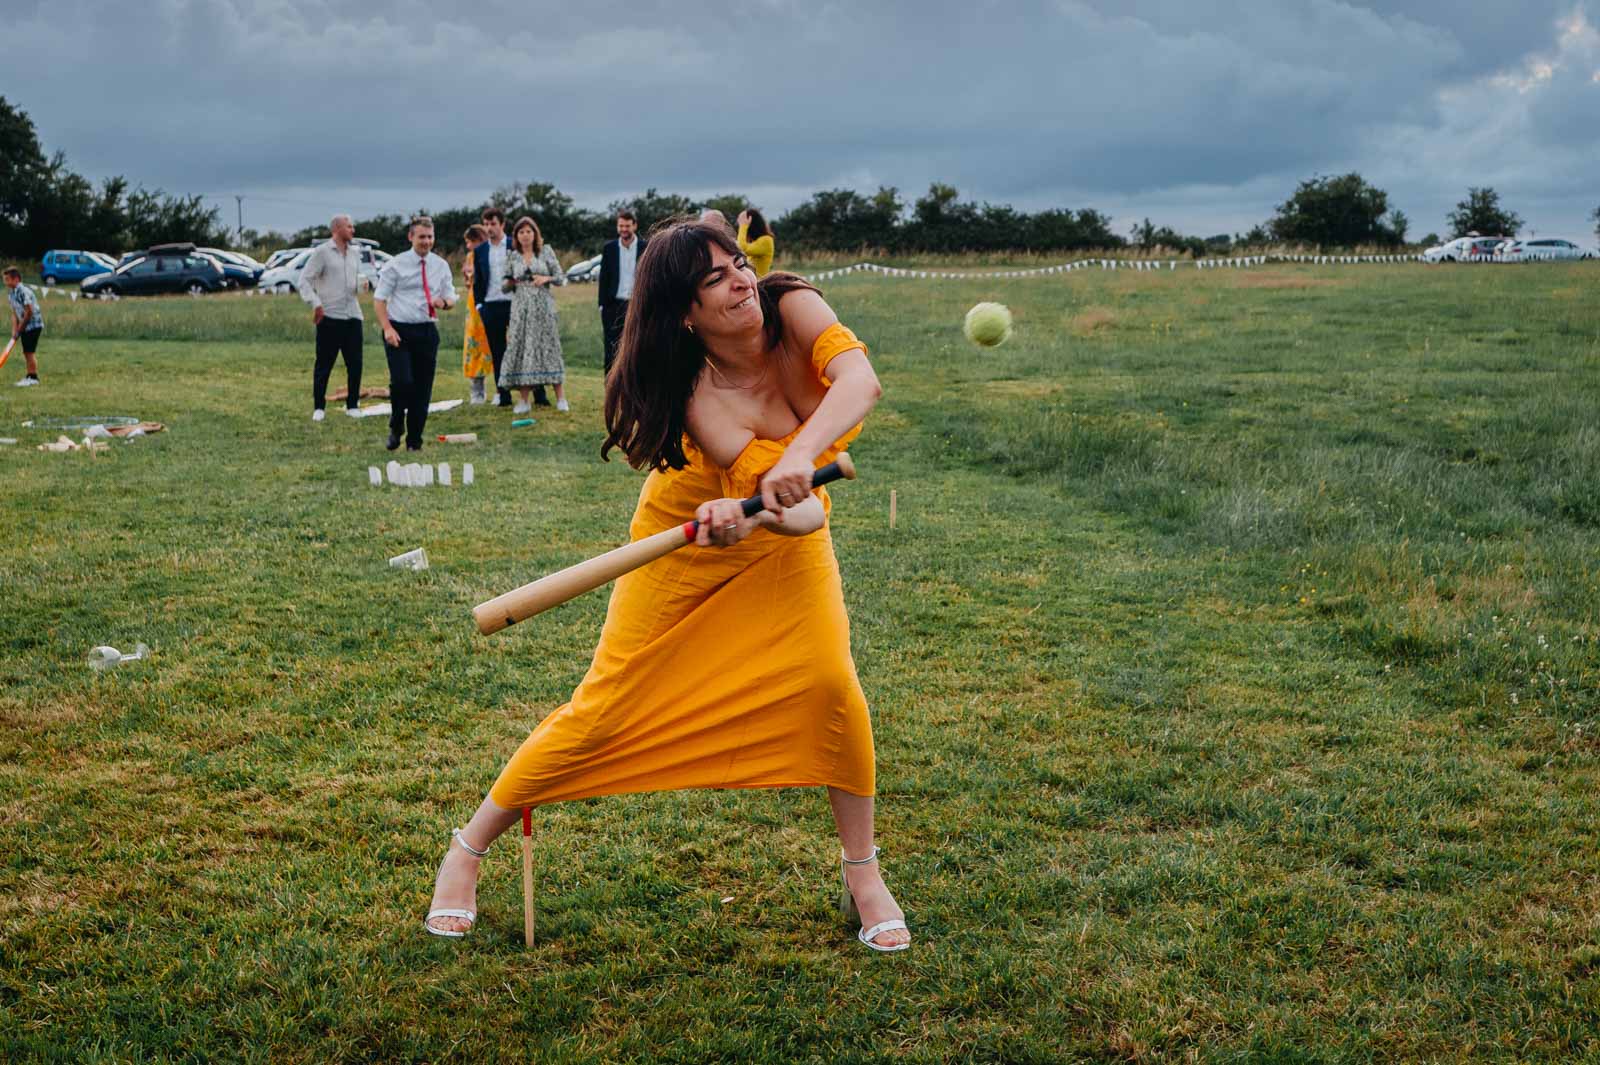 Festival wedding - playing baseball